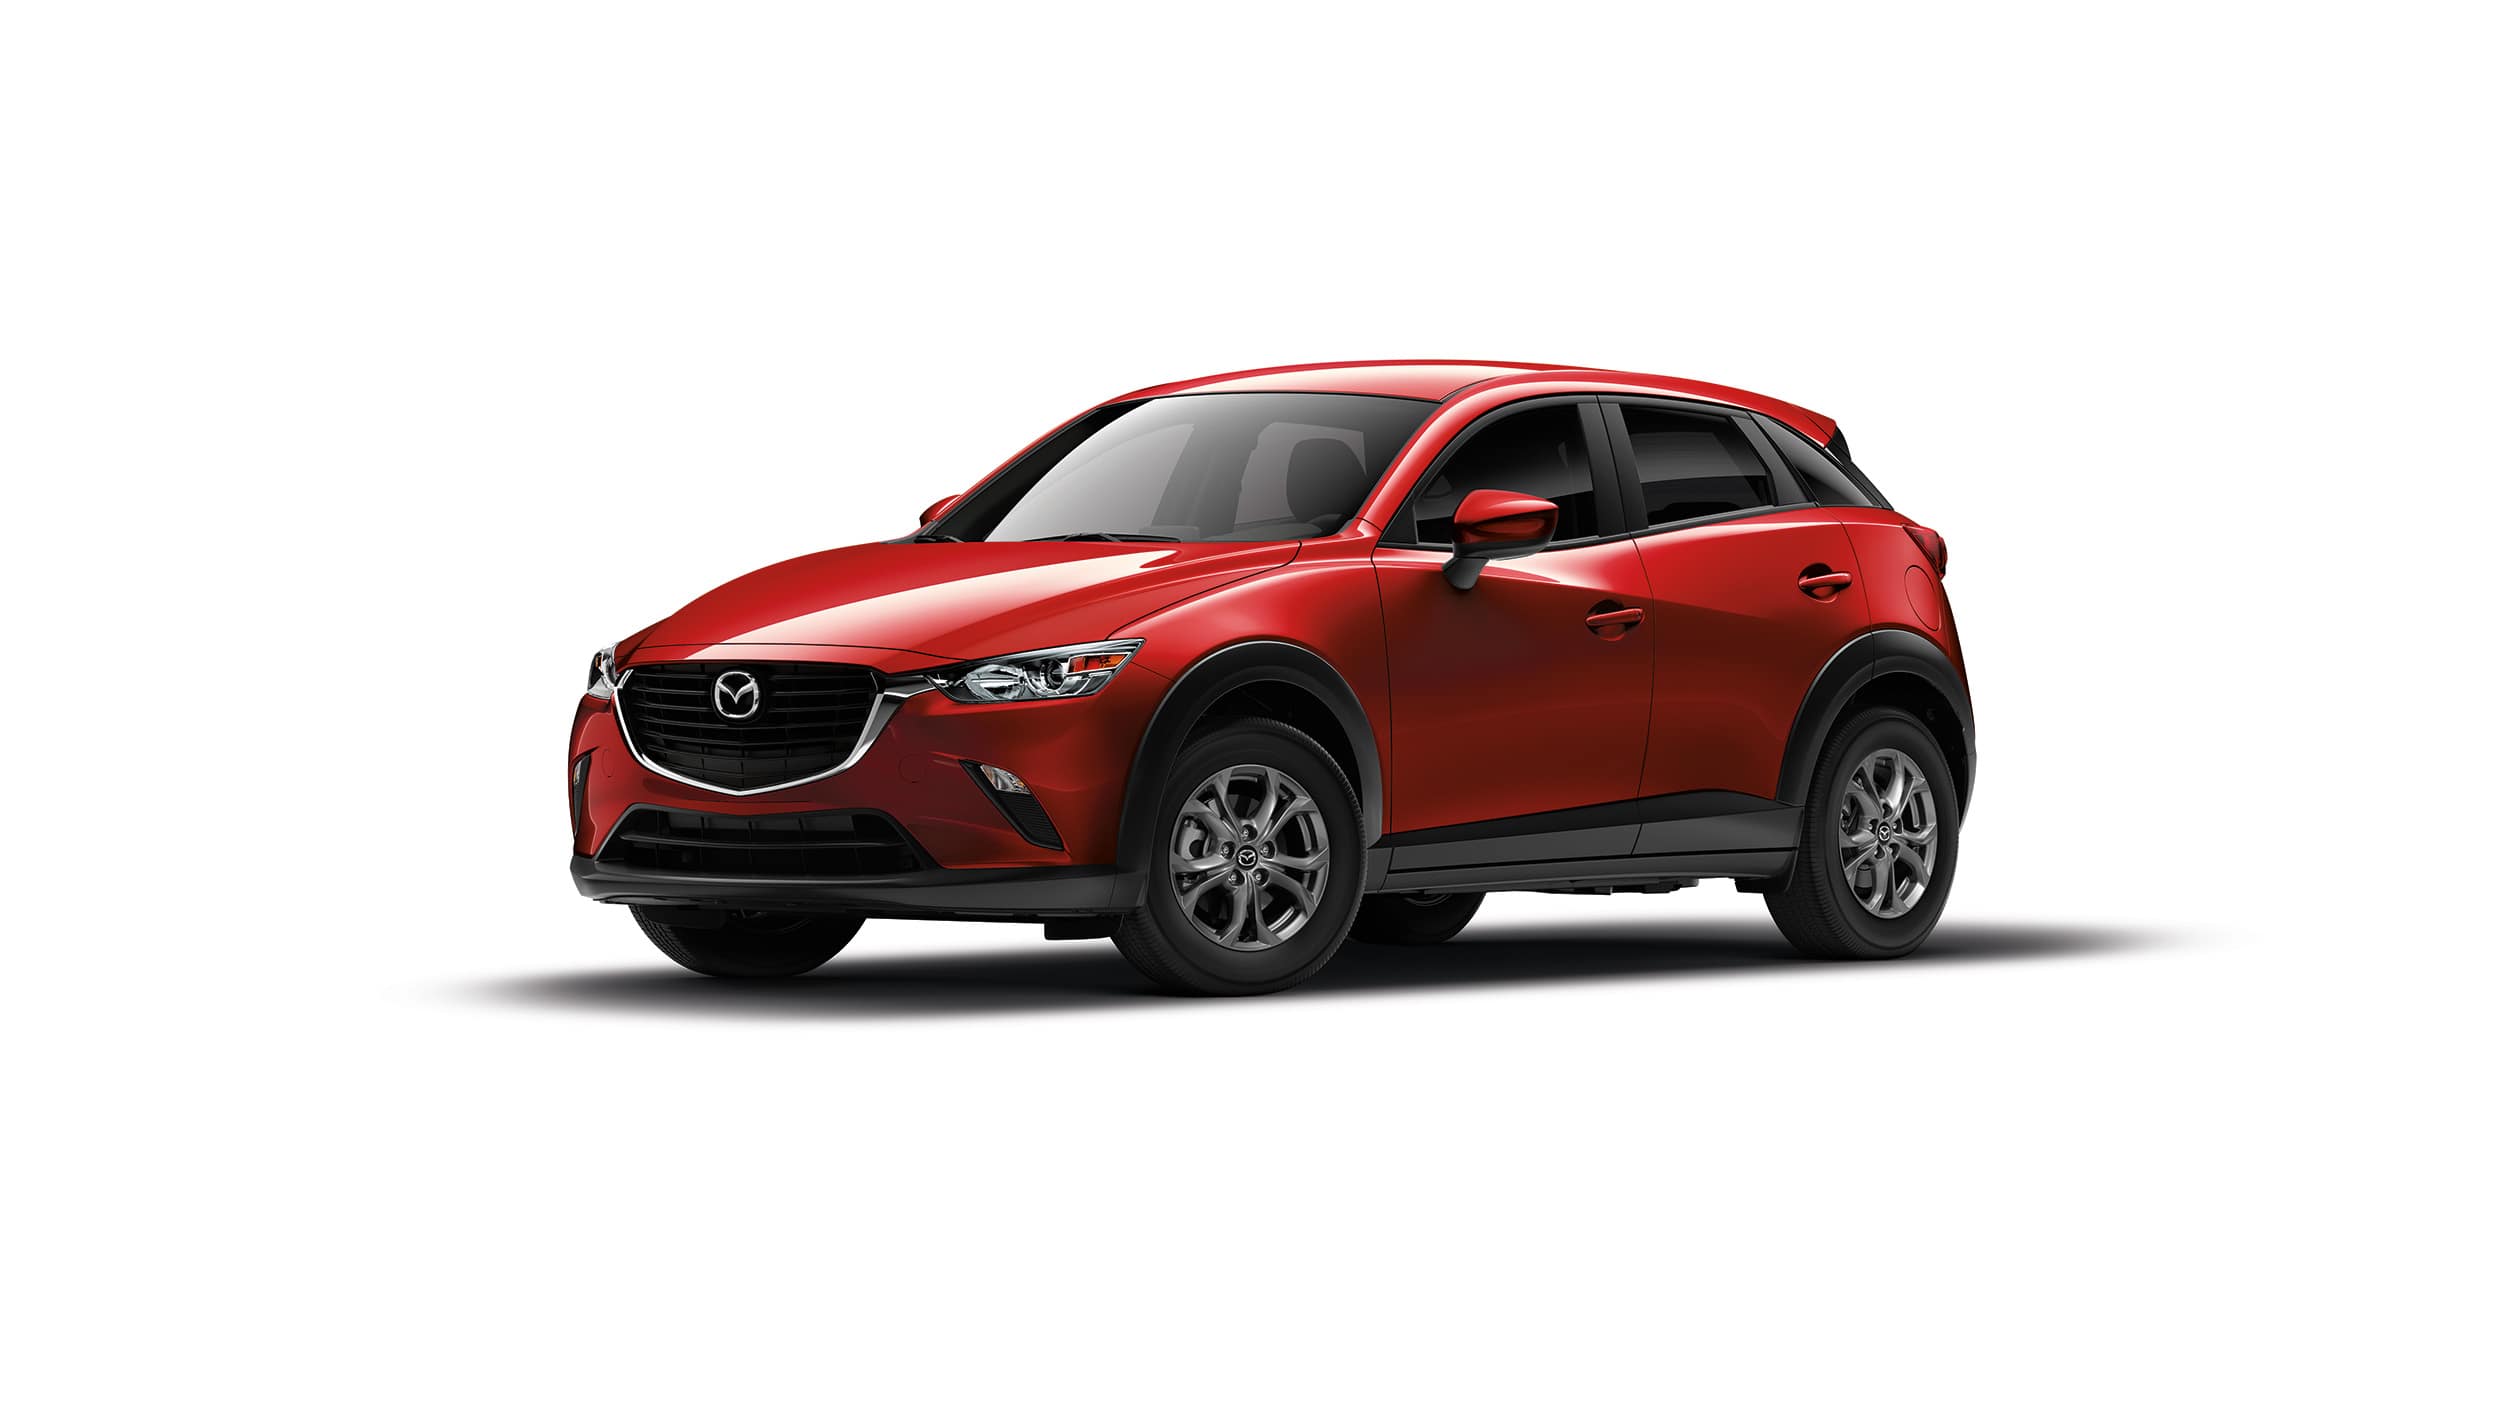 2018 Mazda CX-3 in Soul Red Metallic color